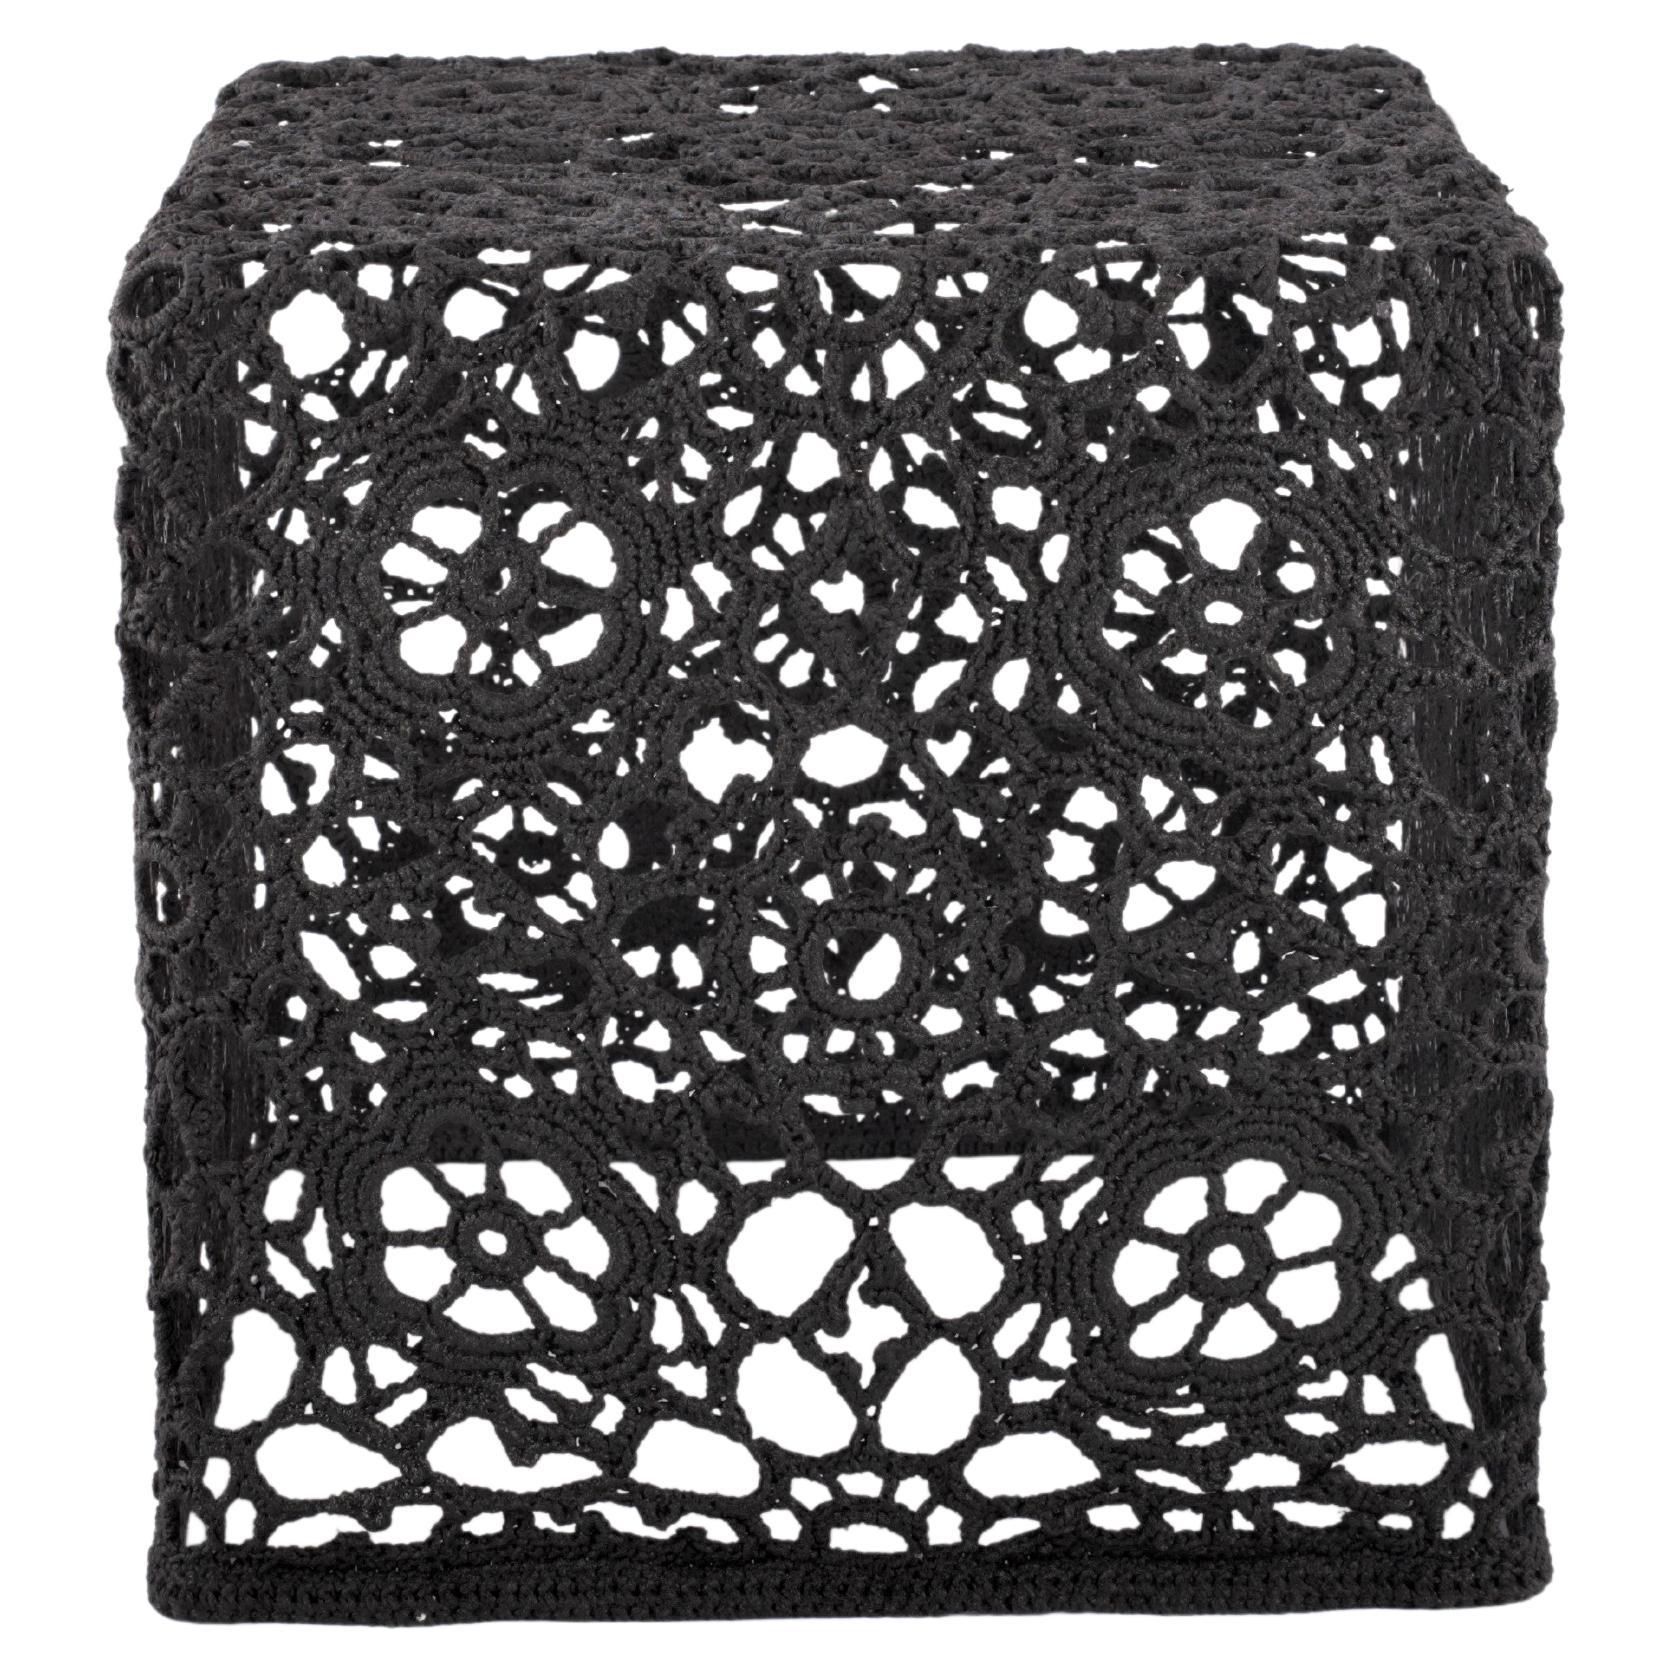 Crochet Side Table, Special Black 3, by Marcel Wanders, 2007 For Sale